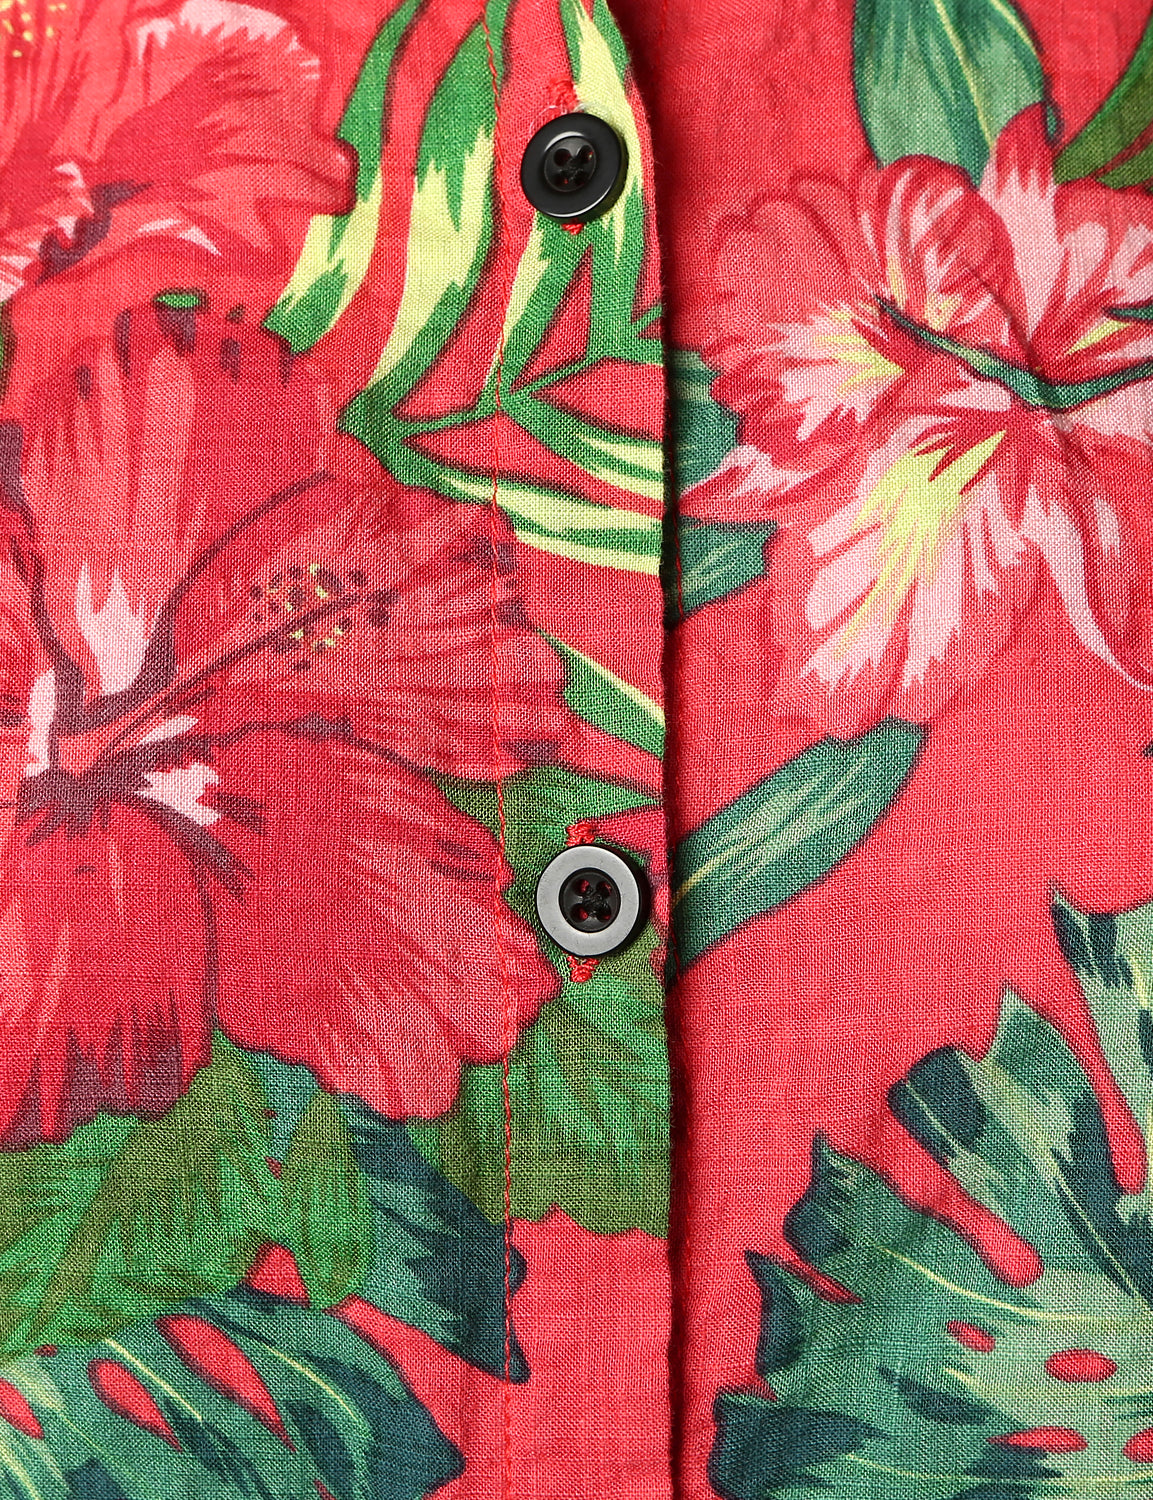 JOGAL Women's Floral Blouse Casual Button Down Short Sleeve Aloha Hawaiian Shirt